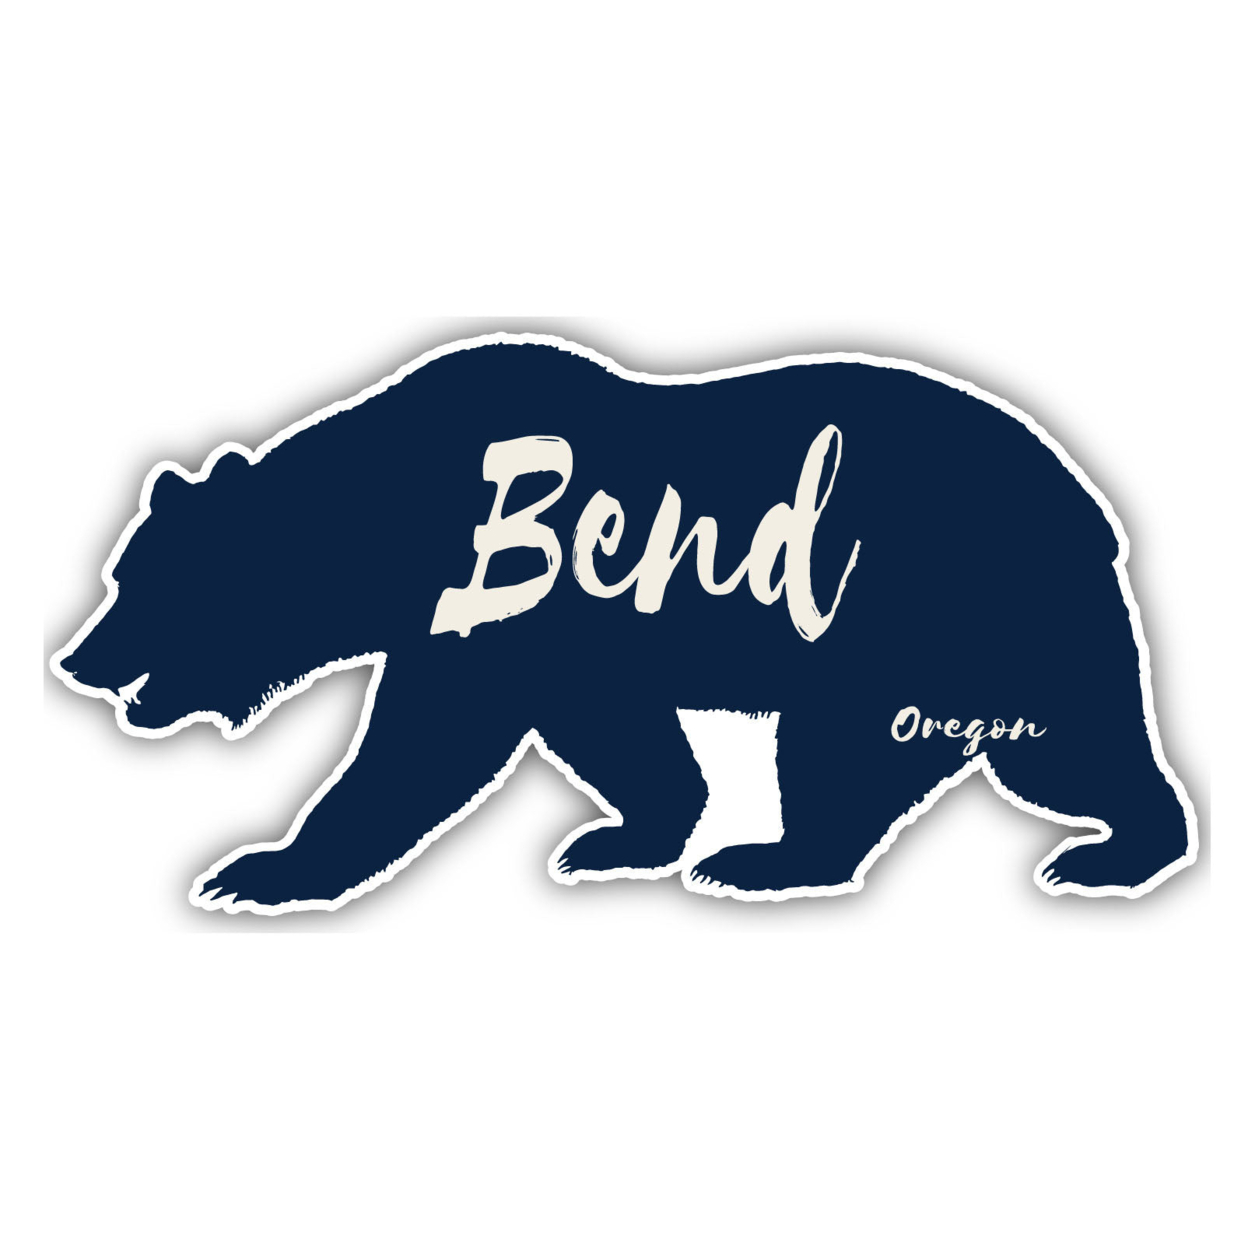 Bend Oregon Souvenir Decorative Stickers (Choose Theme And Size) - 4-Pack, 8-Inch, Tent